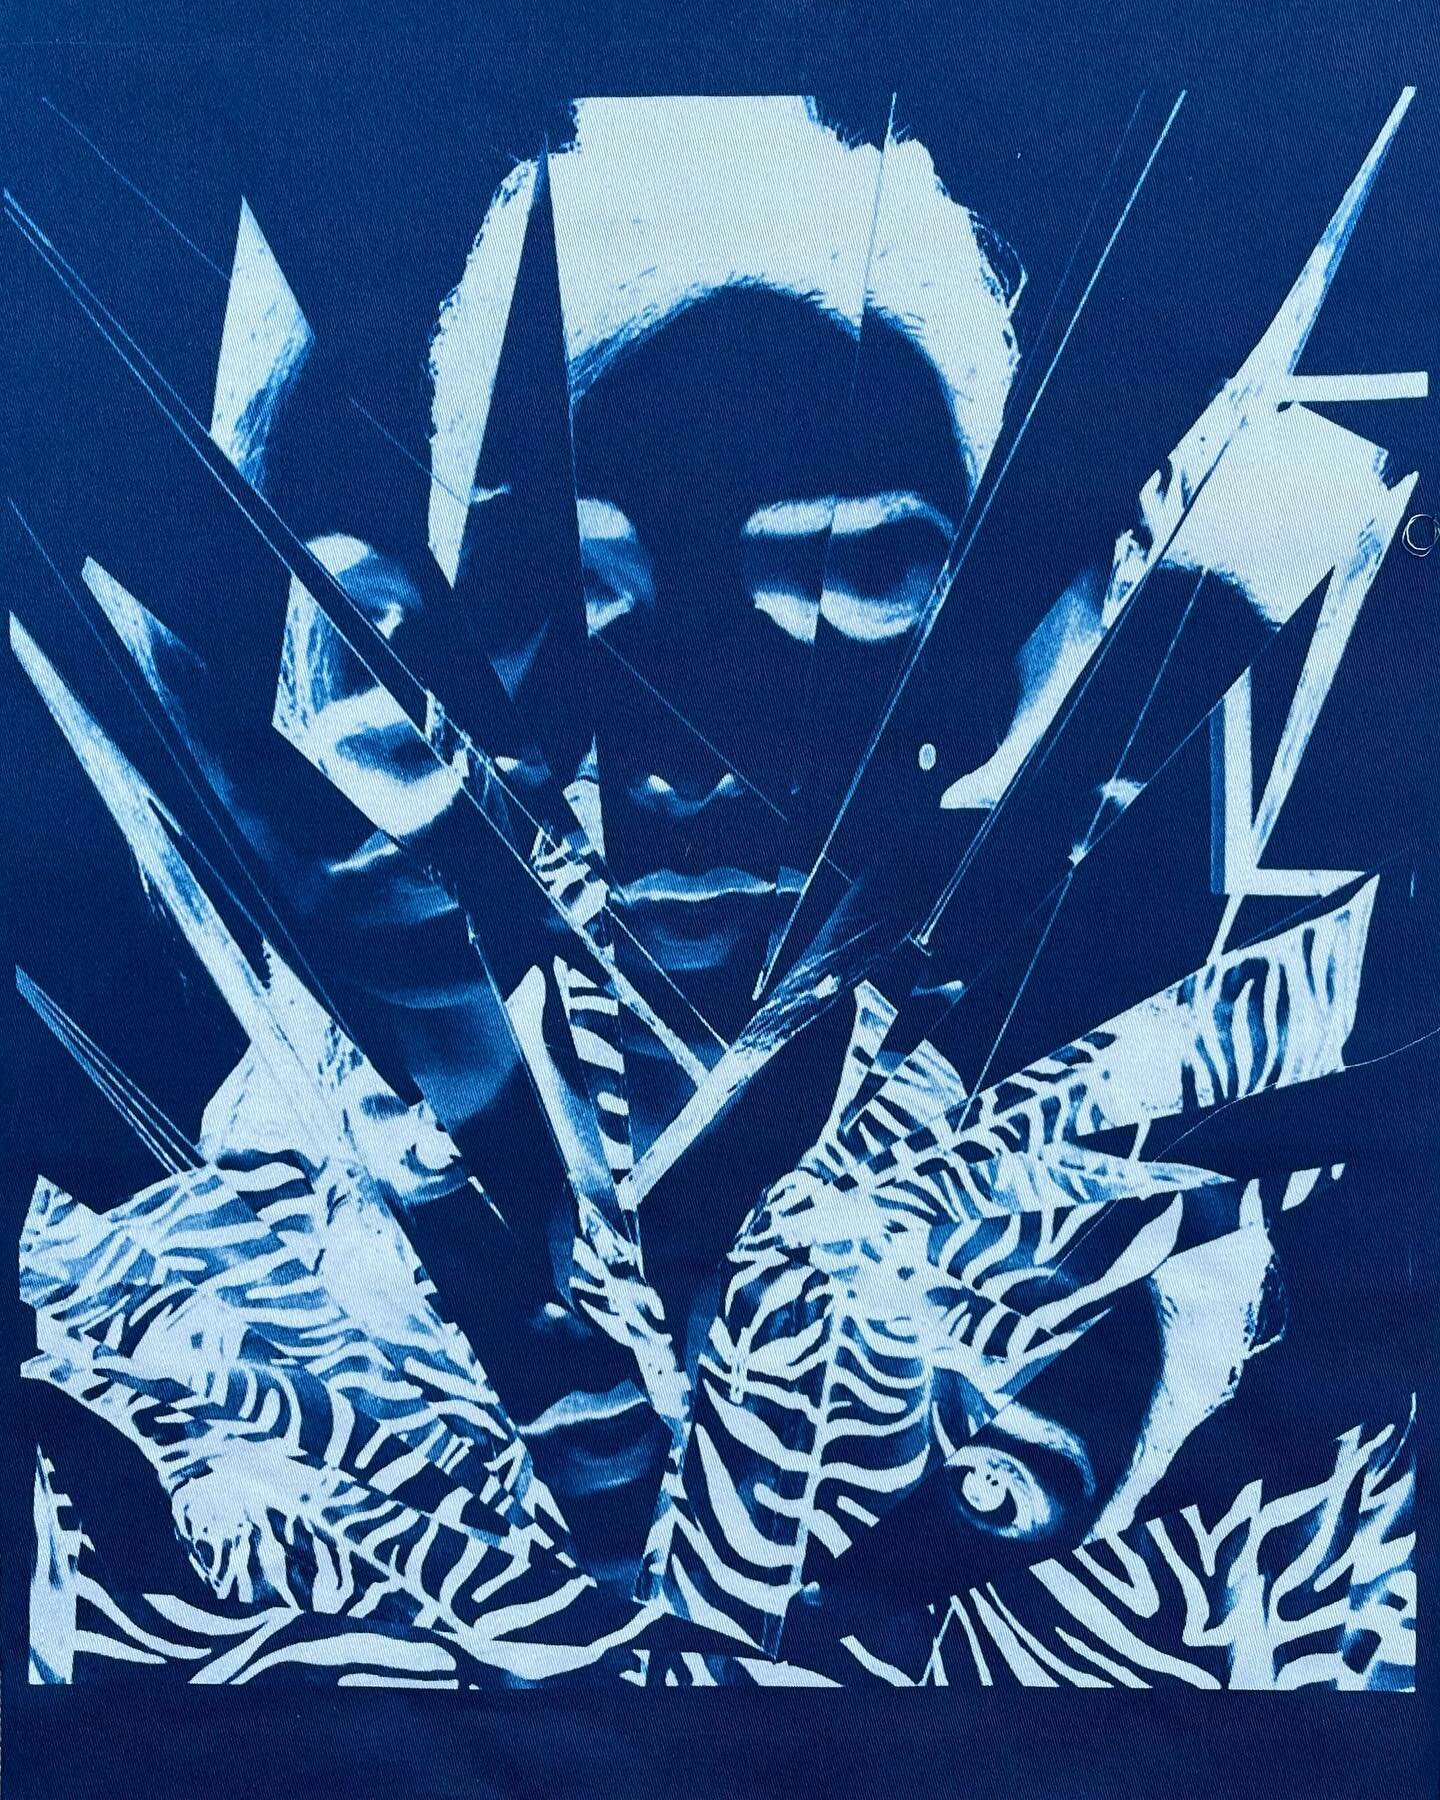 Cyanotype print on Fabric (Version 4 of 4)-The Blue Project #collage #selfportrait #printmaking @christina_fesmire #lynkcollective #portrait #cyanotype #blue lynkcollective.com studioarteur.com #selfportrait #portrait #cyanotypeonfabric #print